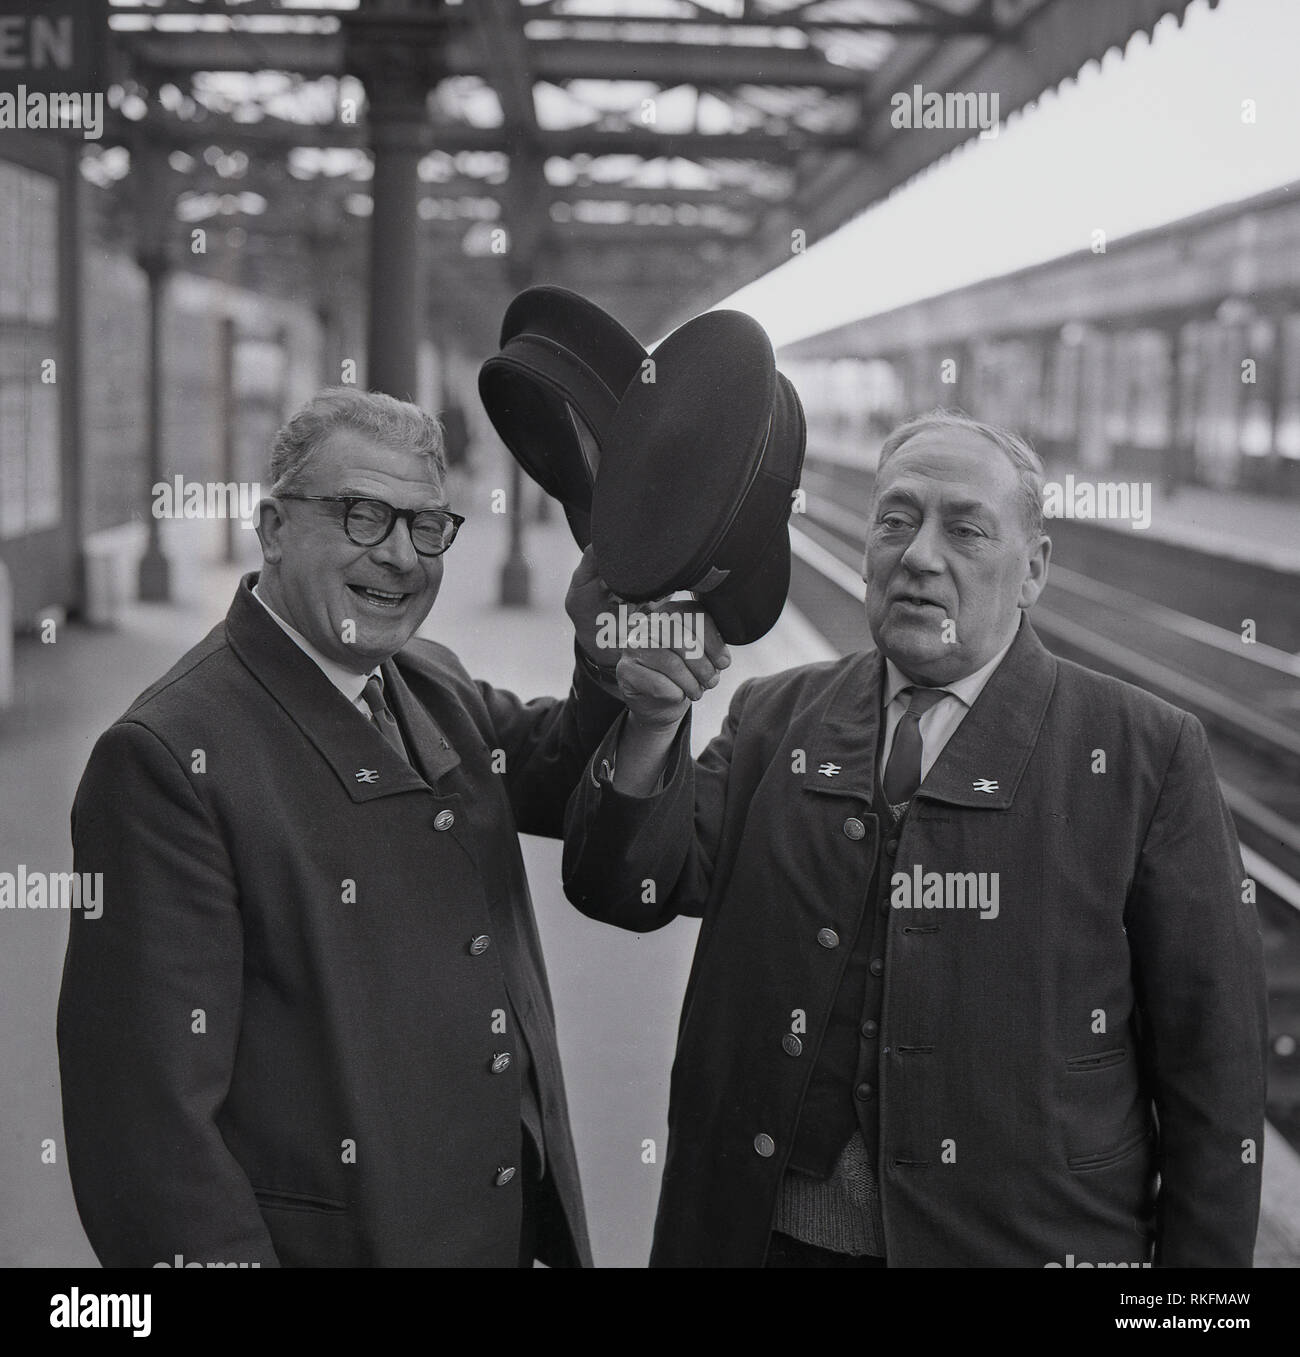 1968, two cheerful uniformed British Rail station staff, a foreman and ticket collector standing on a platform at Blackheath railway station, raise their caps, Blackheath, London, England, UK. Stock Photo